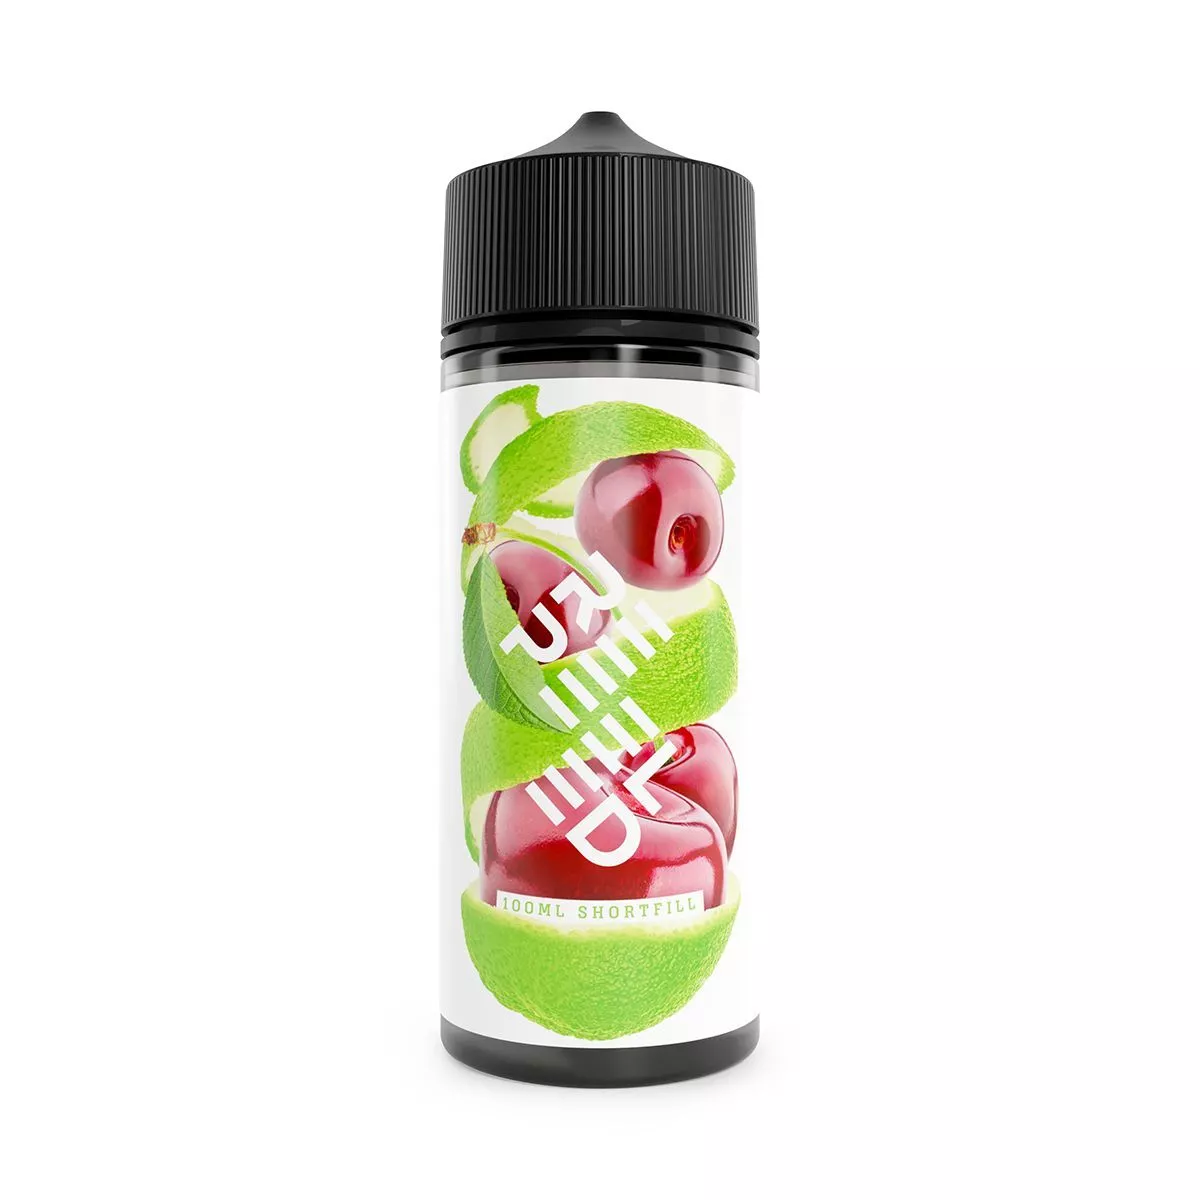 Repeeled E-liquid 100ml Shortfill Lime & Cherry